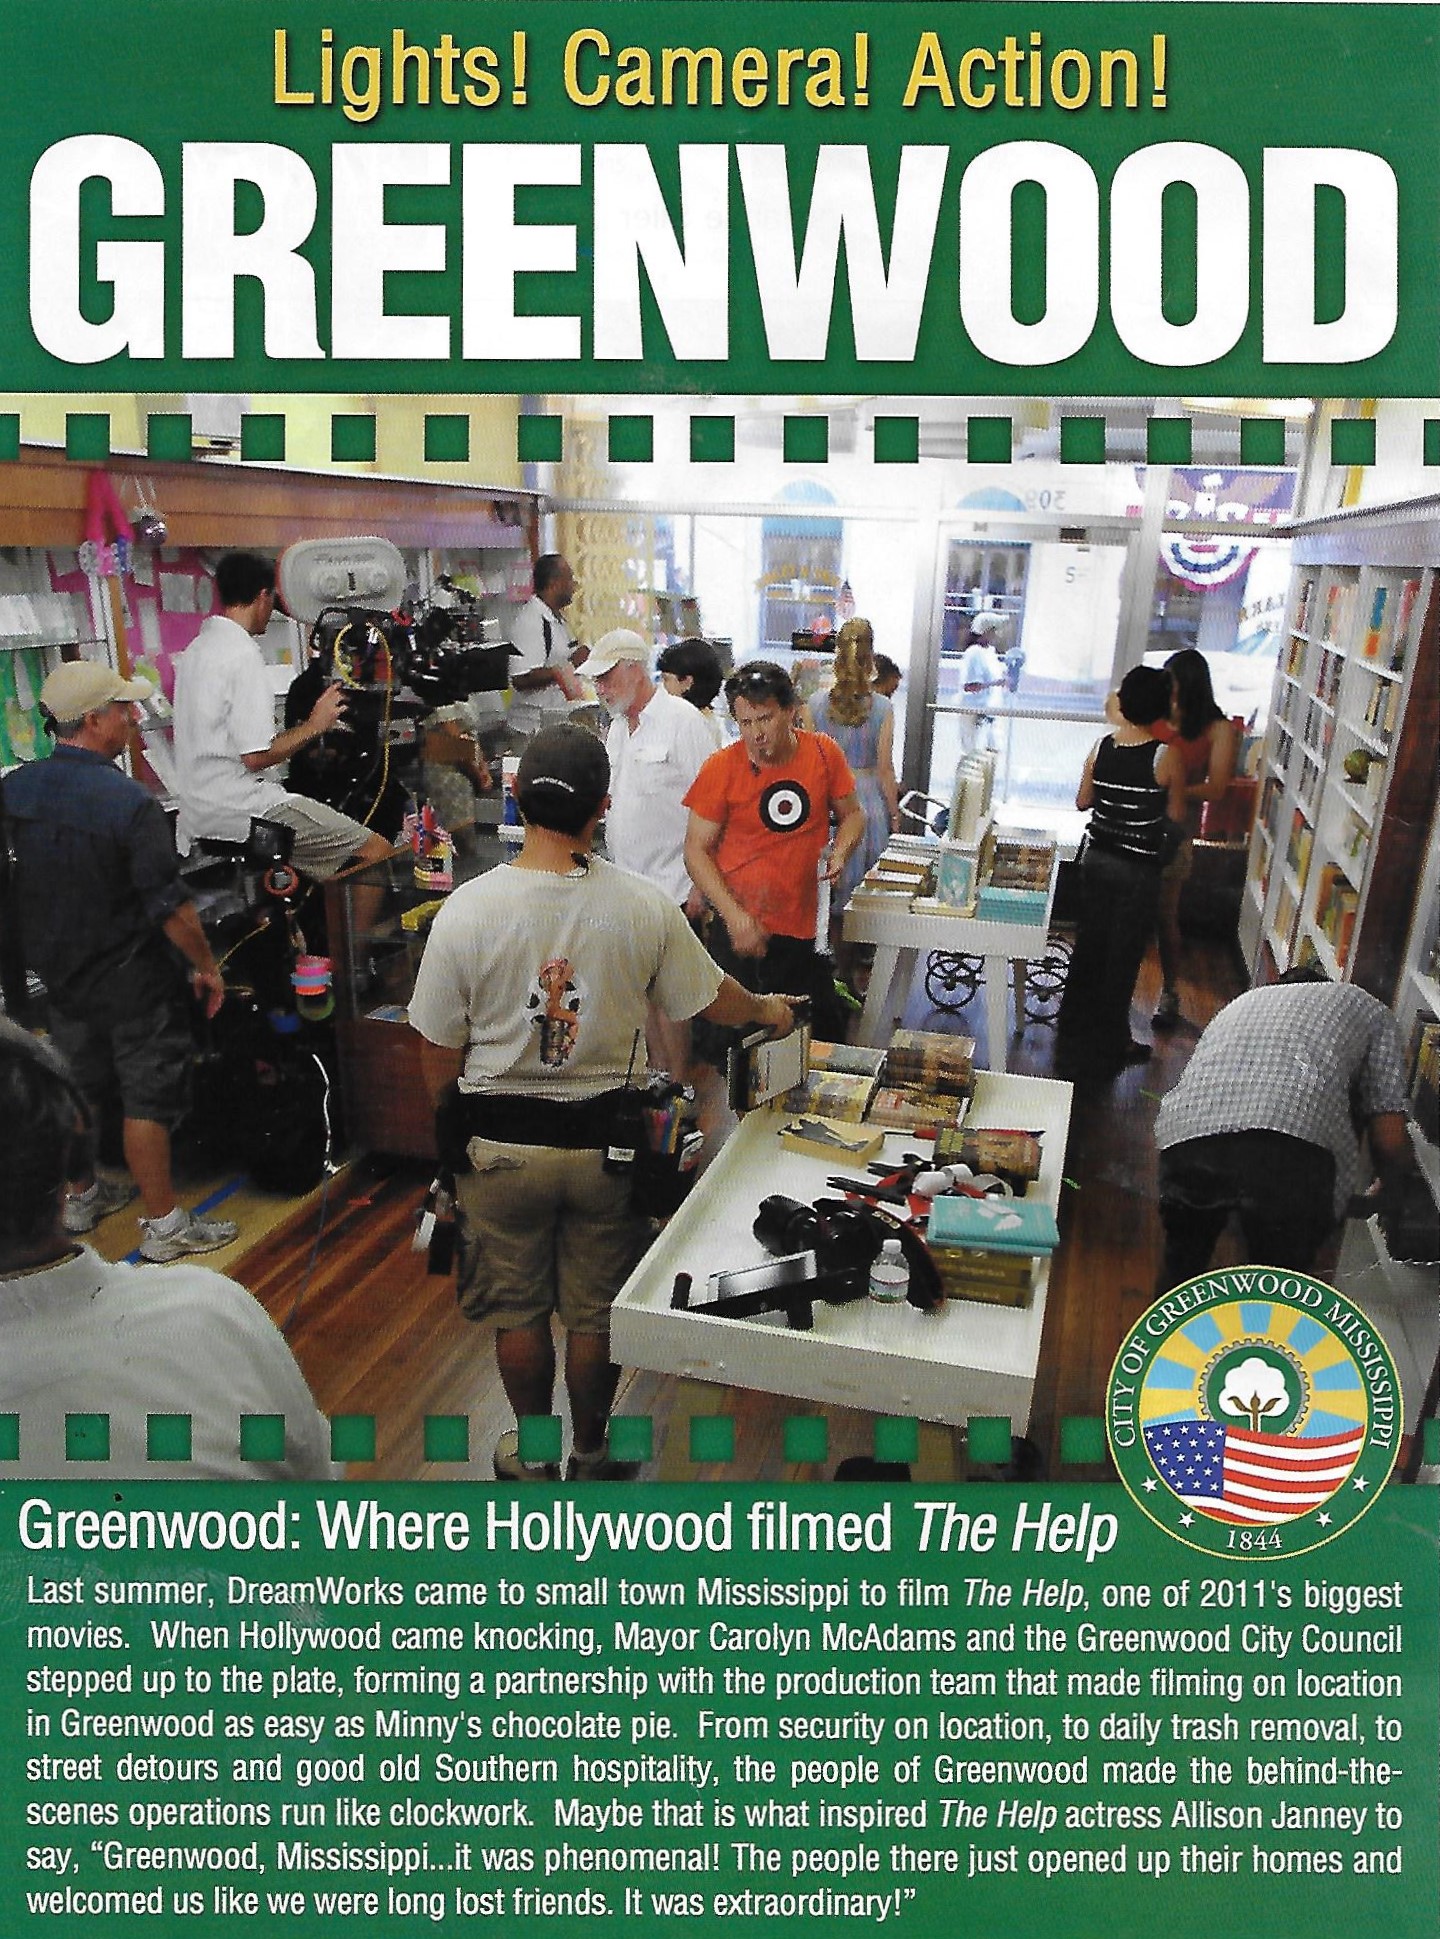 THE HELP was filmed in GREENWOOD!